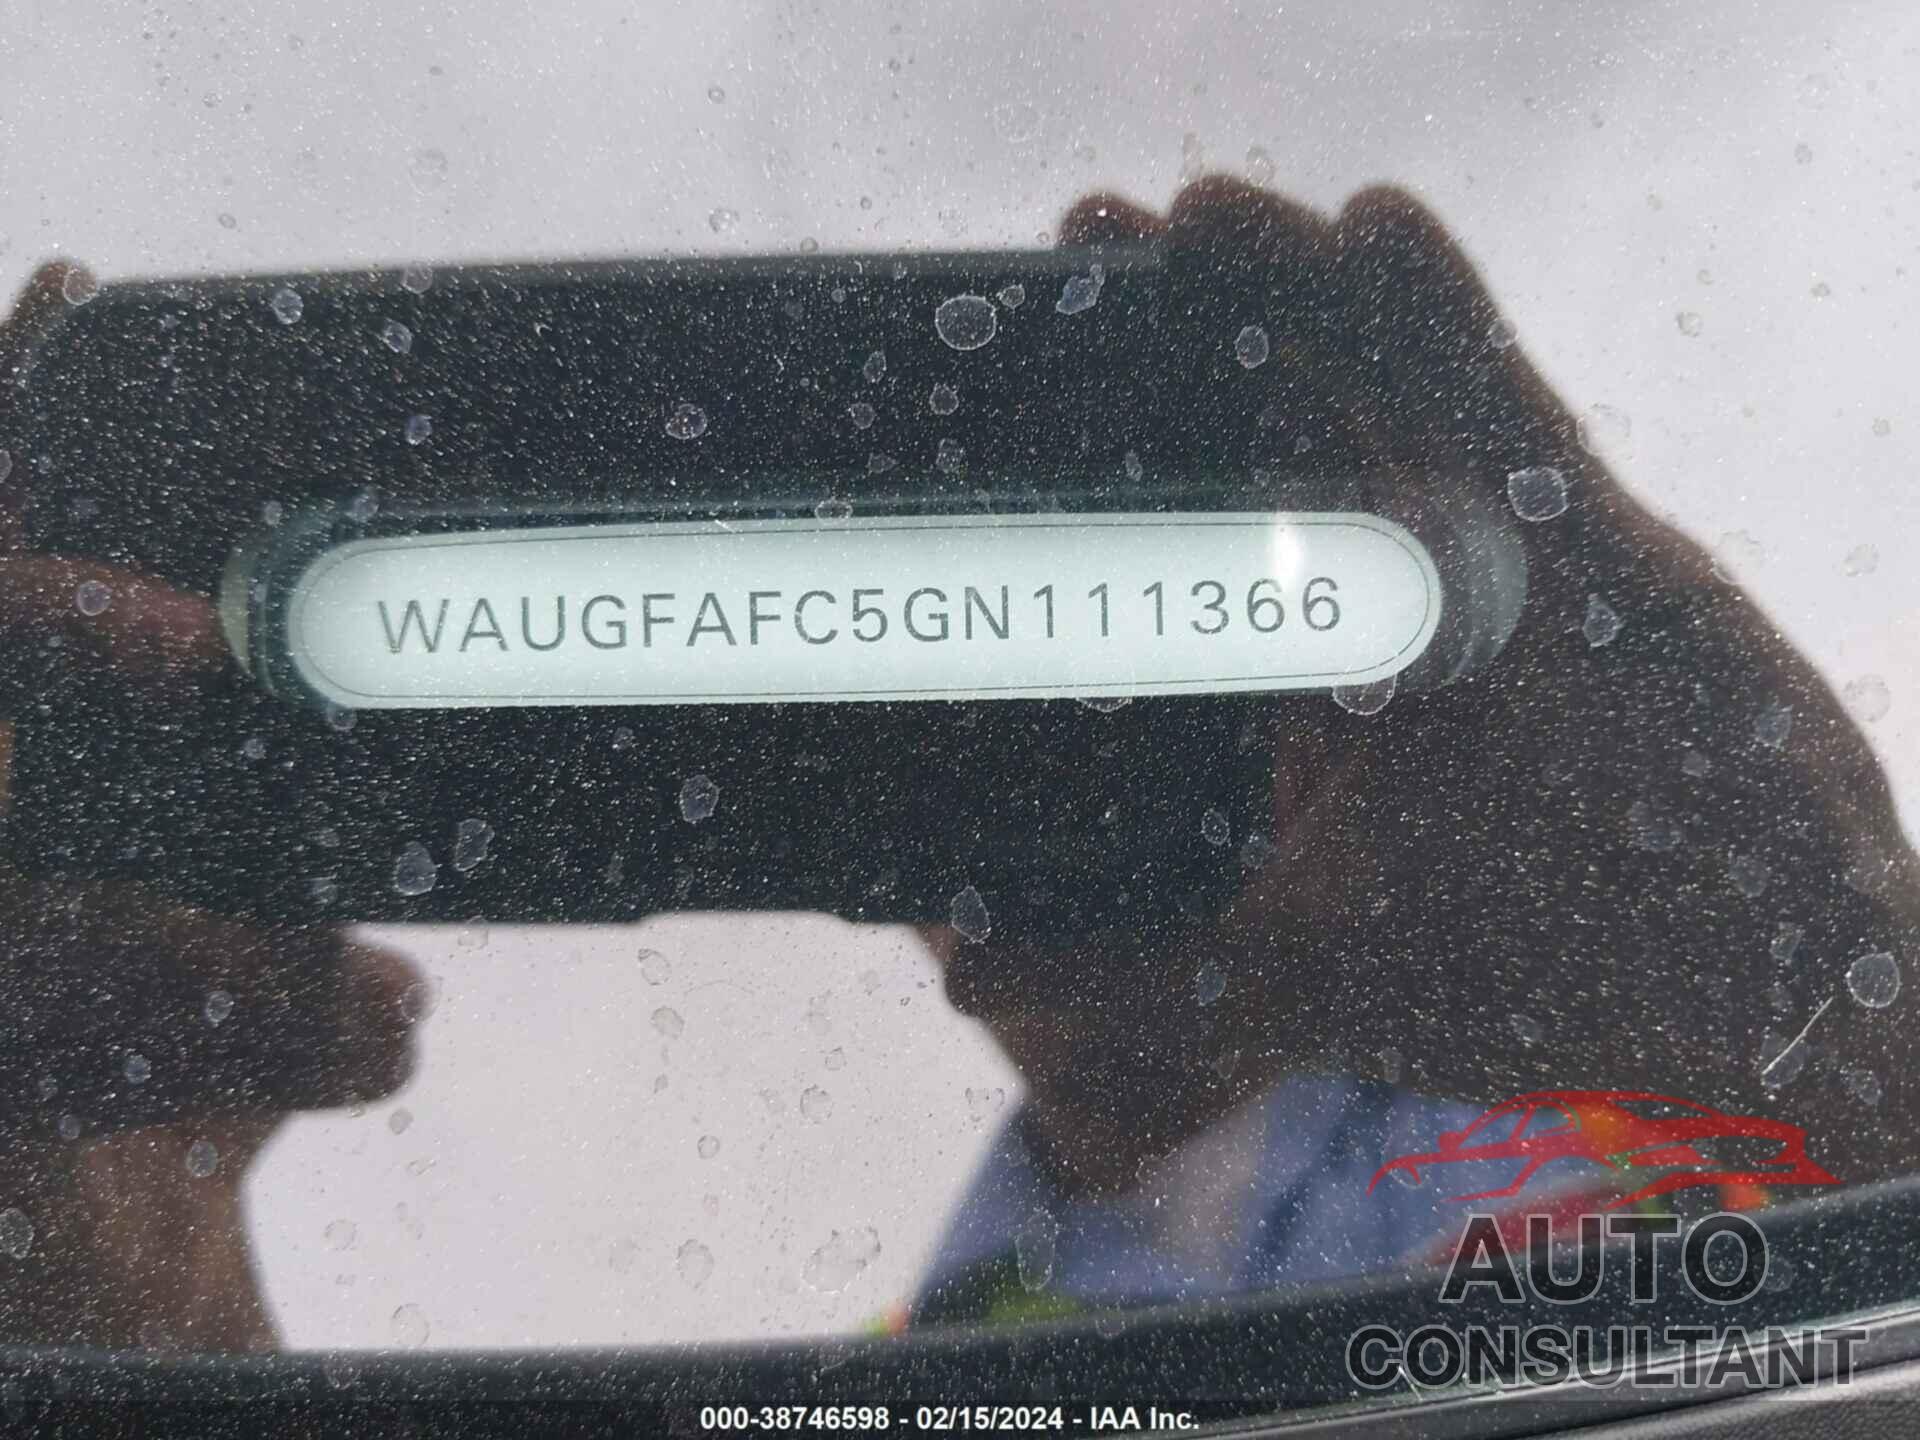 AUDI A6 2016 - WAUGFAFC5GN111366